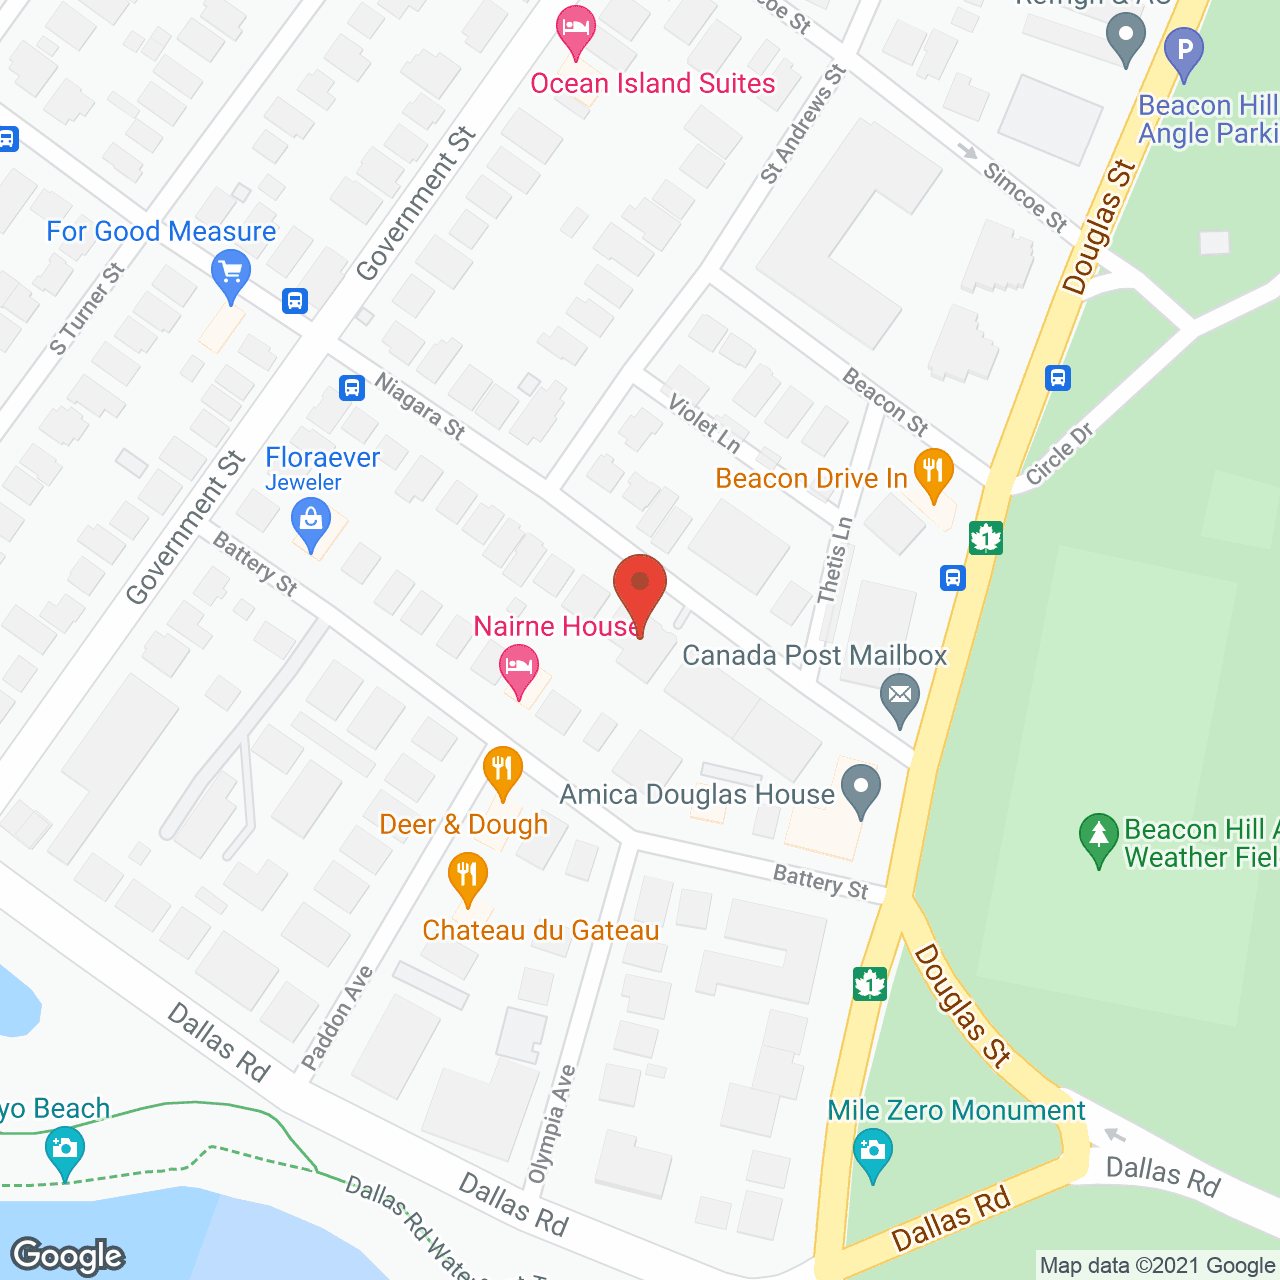 Douglas Care Community in google map